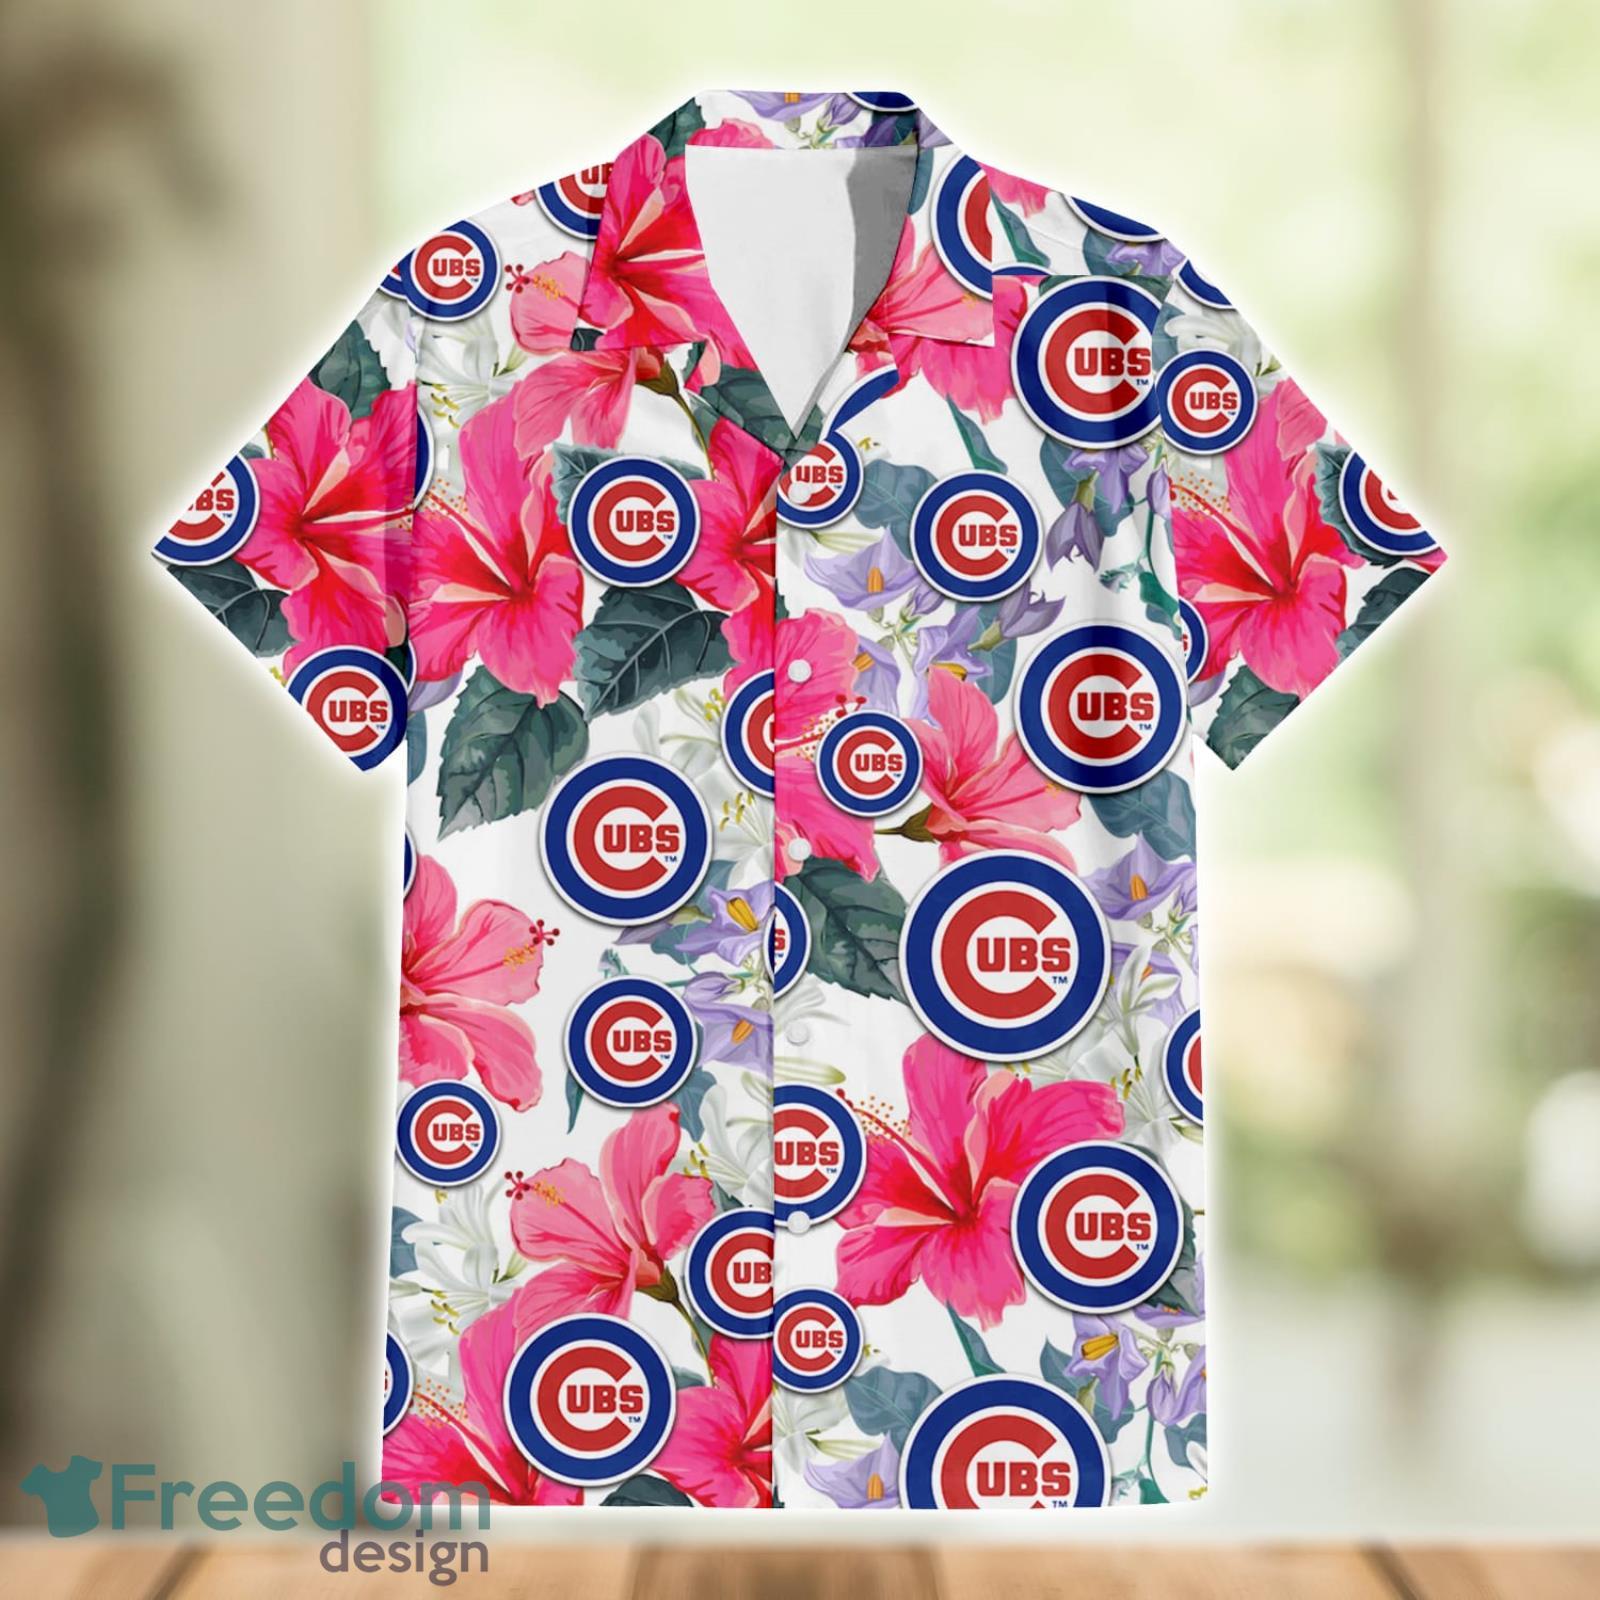 Chicago Cubs Pink Logo Shirt